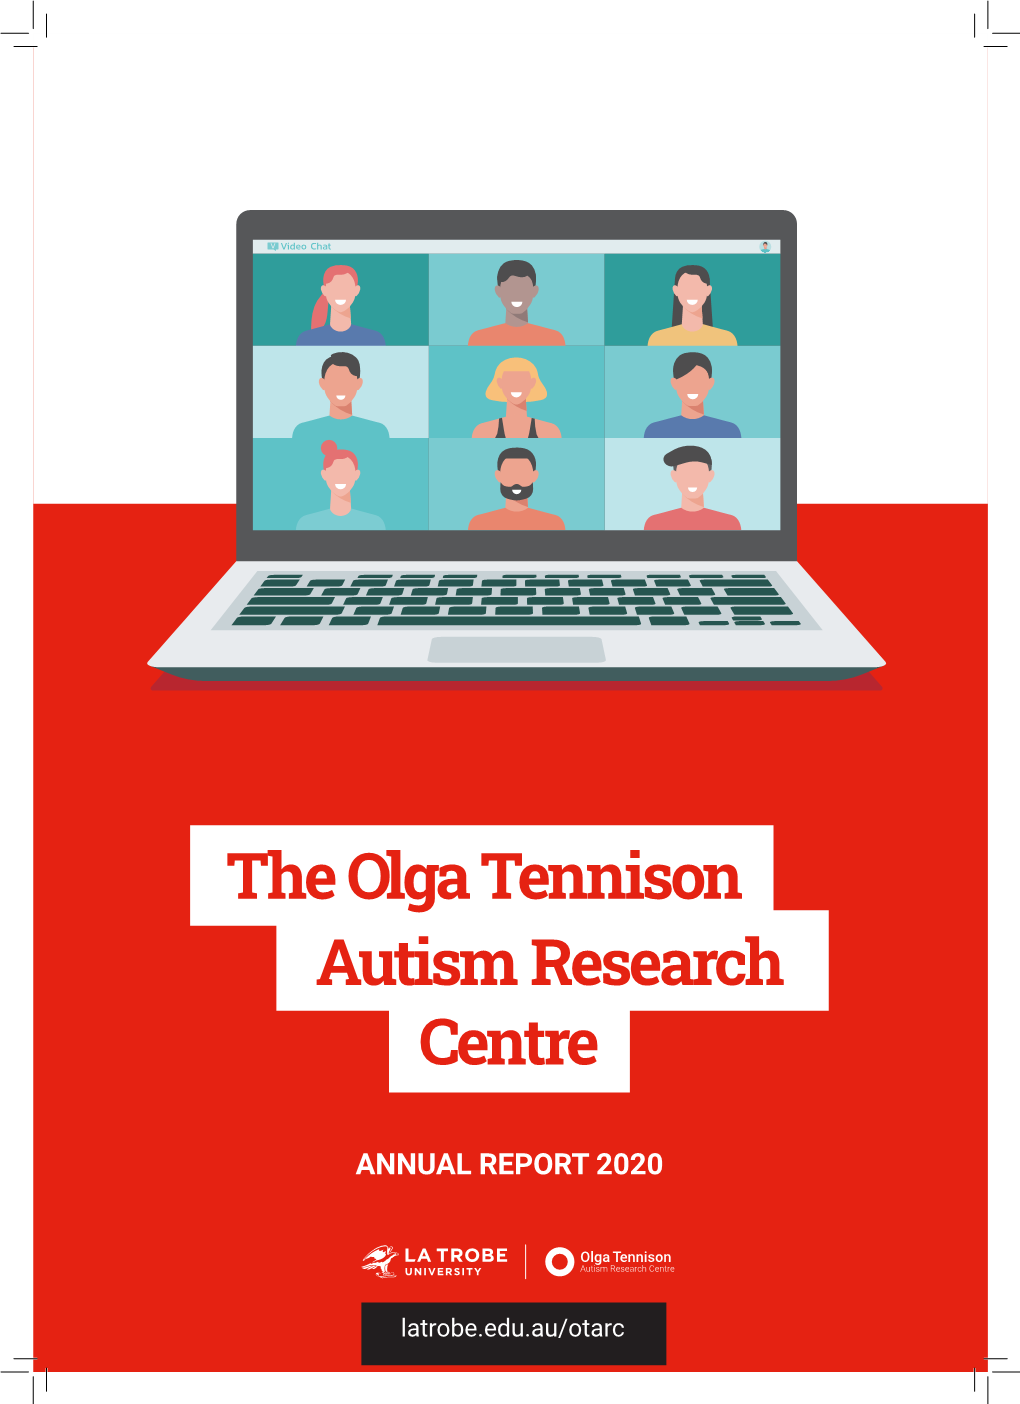 The Olga Tennison Autism Research Centre